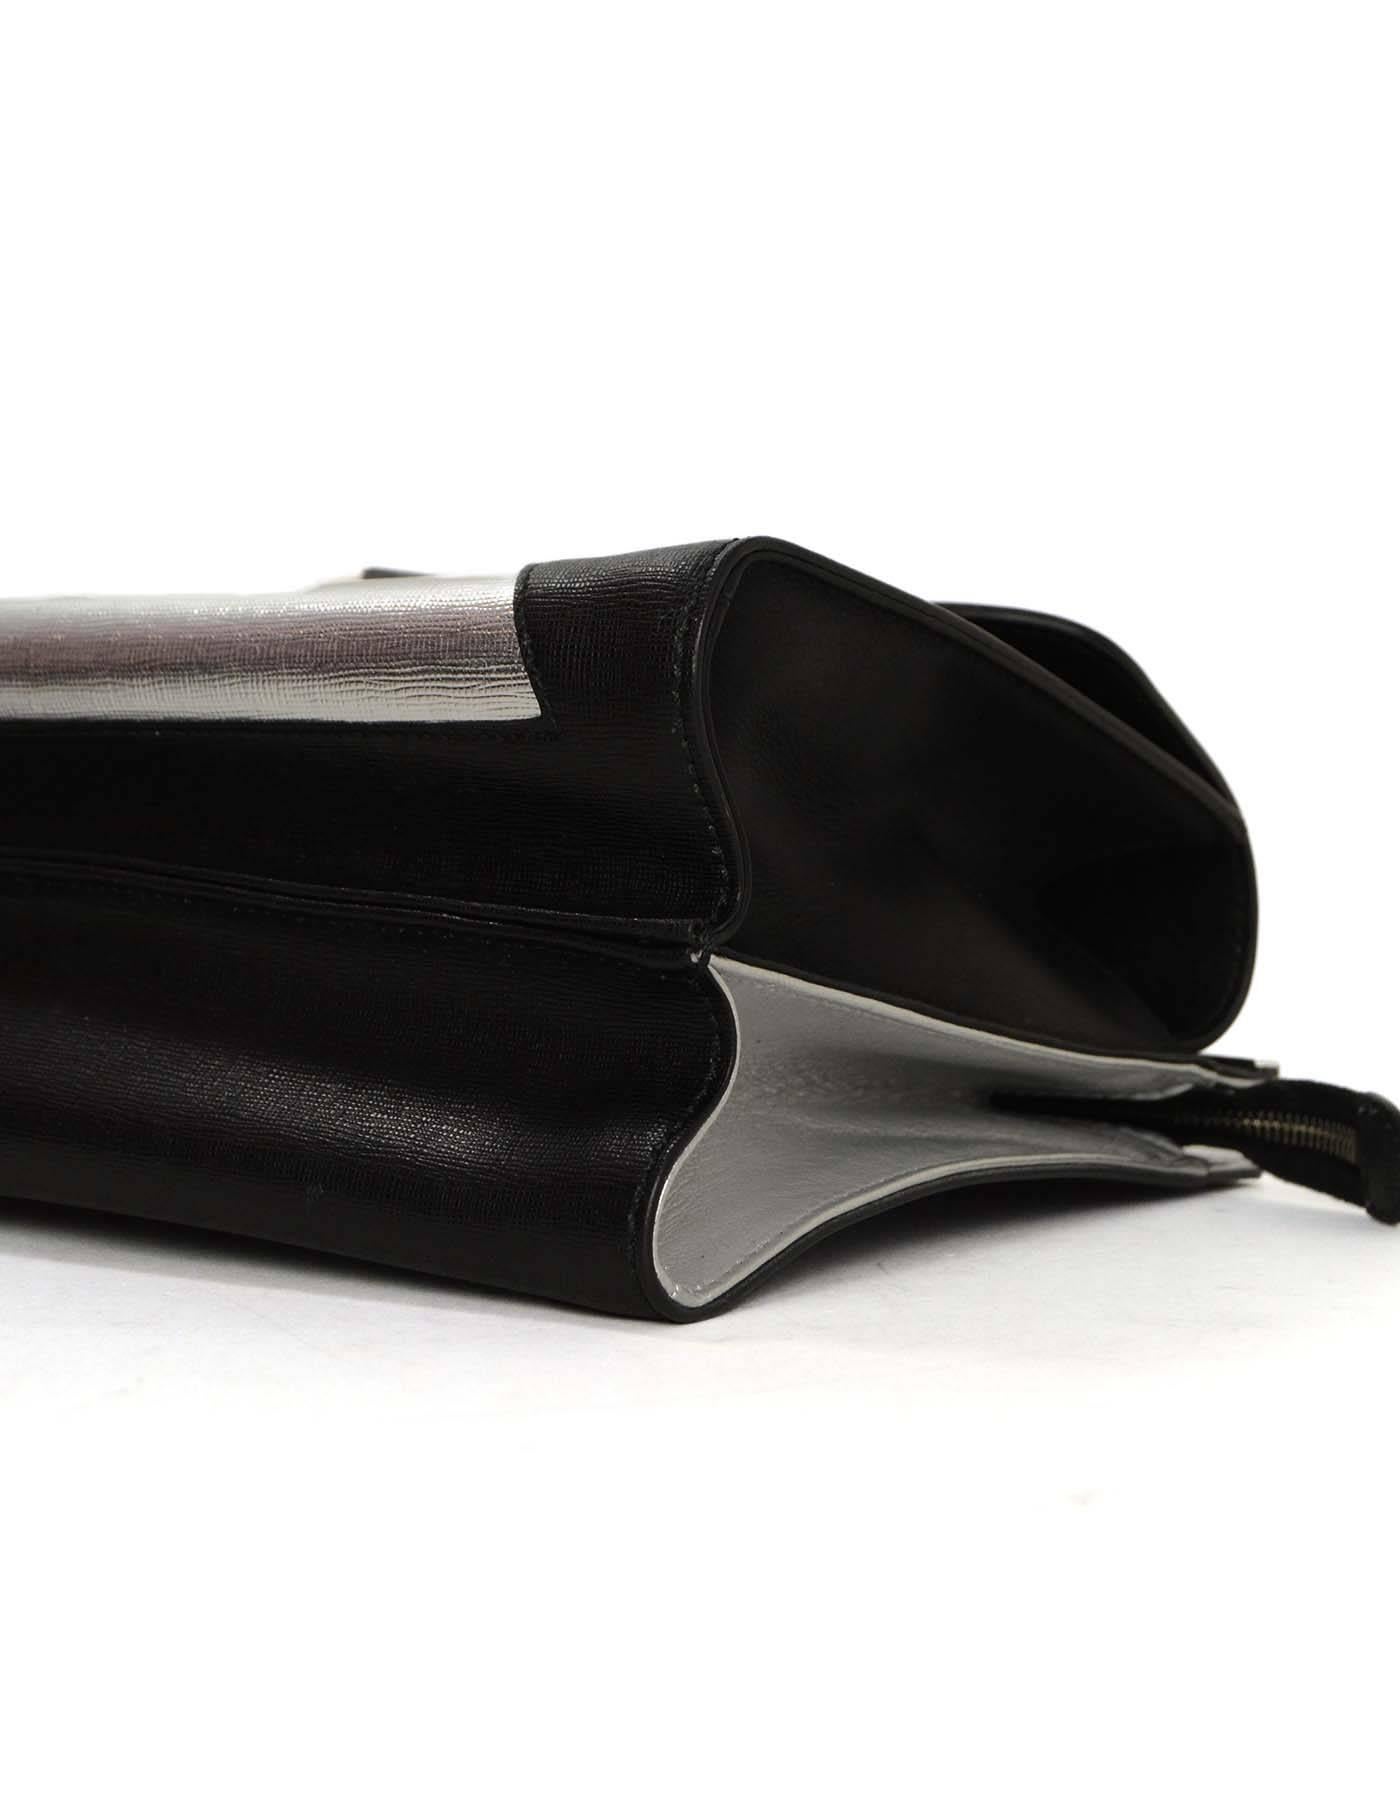 Fendi Black & Silver Textured Leather 'Demijours' Bag SHW rt. $2, 025 1